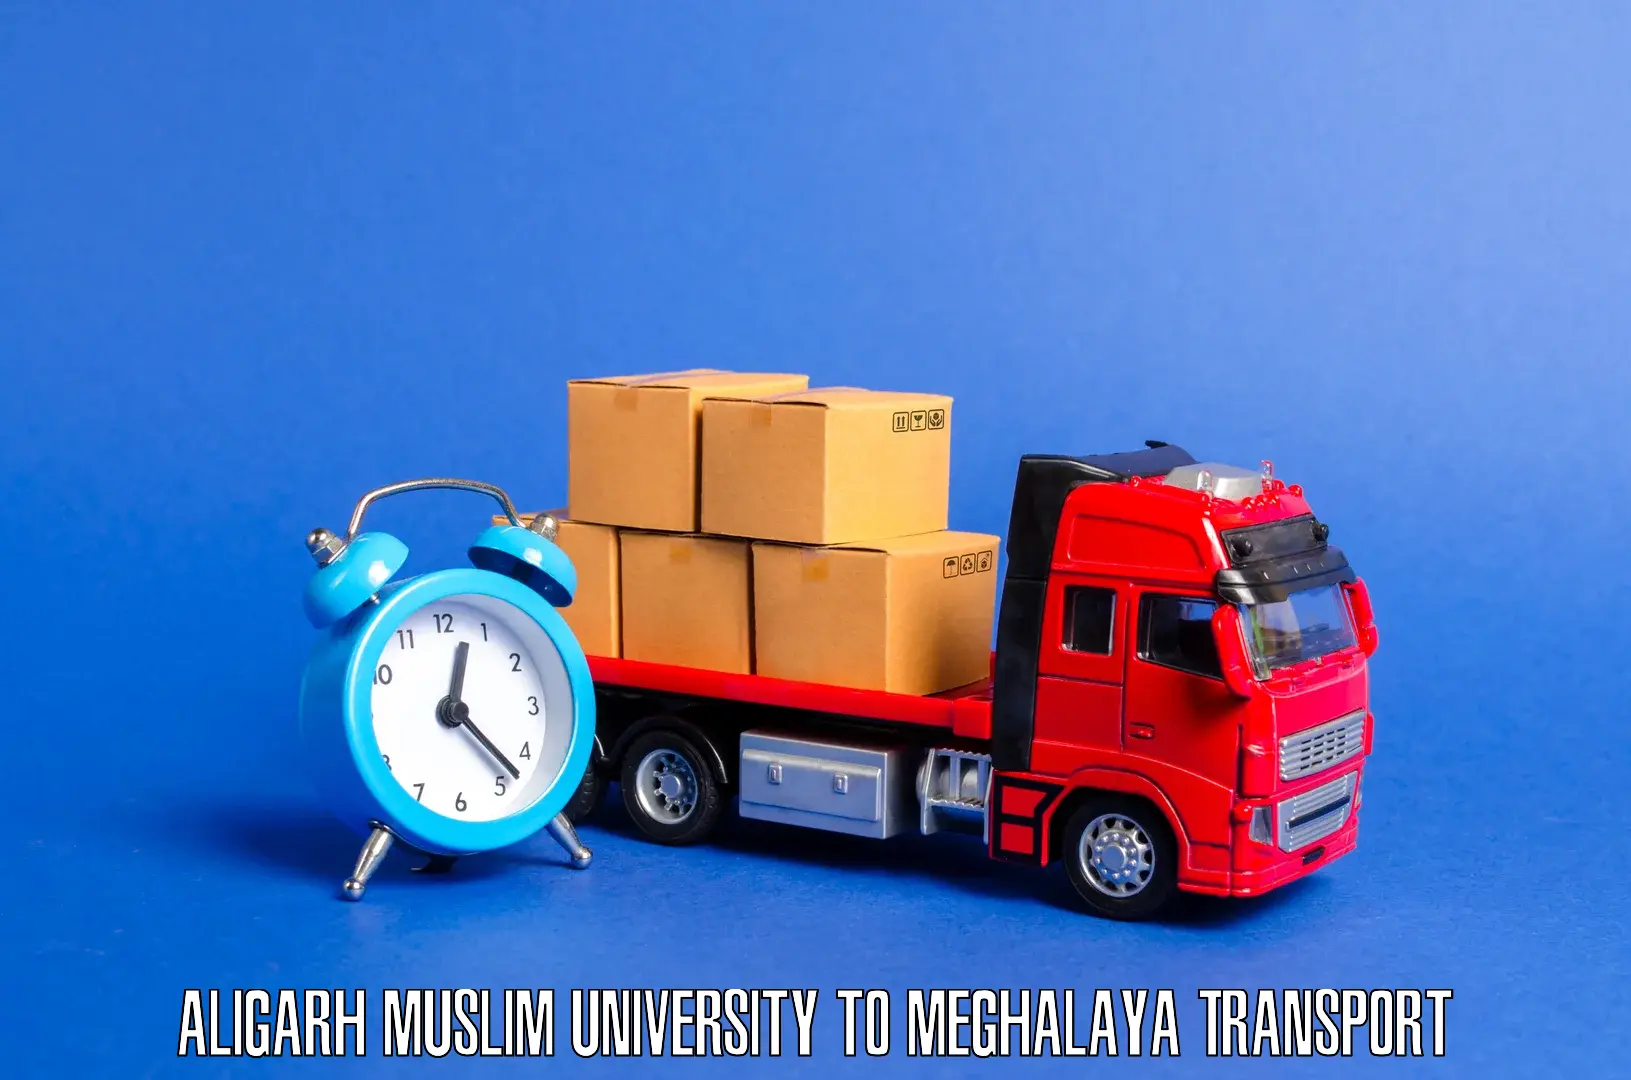 Commercial transport service Aligarh Muslim University to Meghalaya